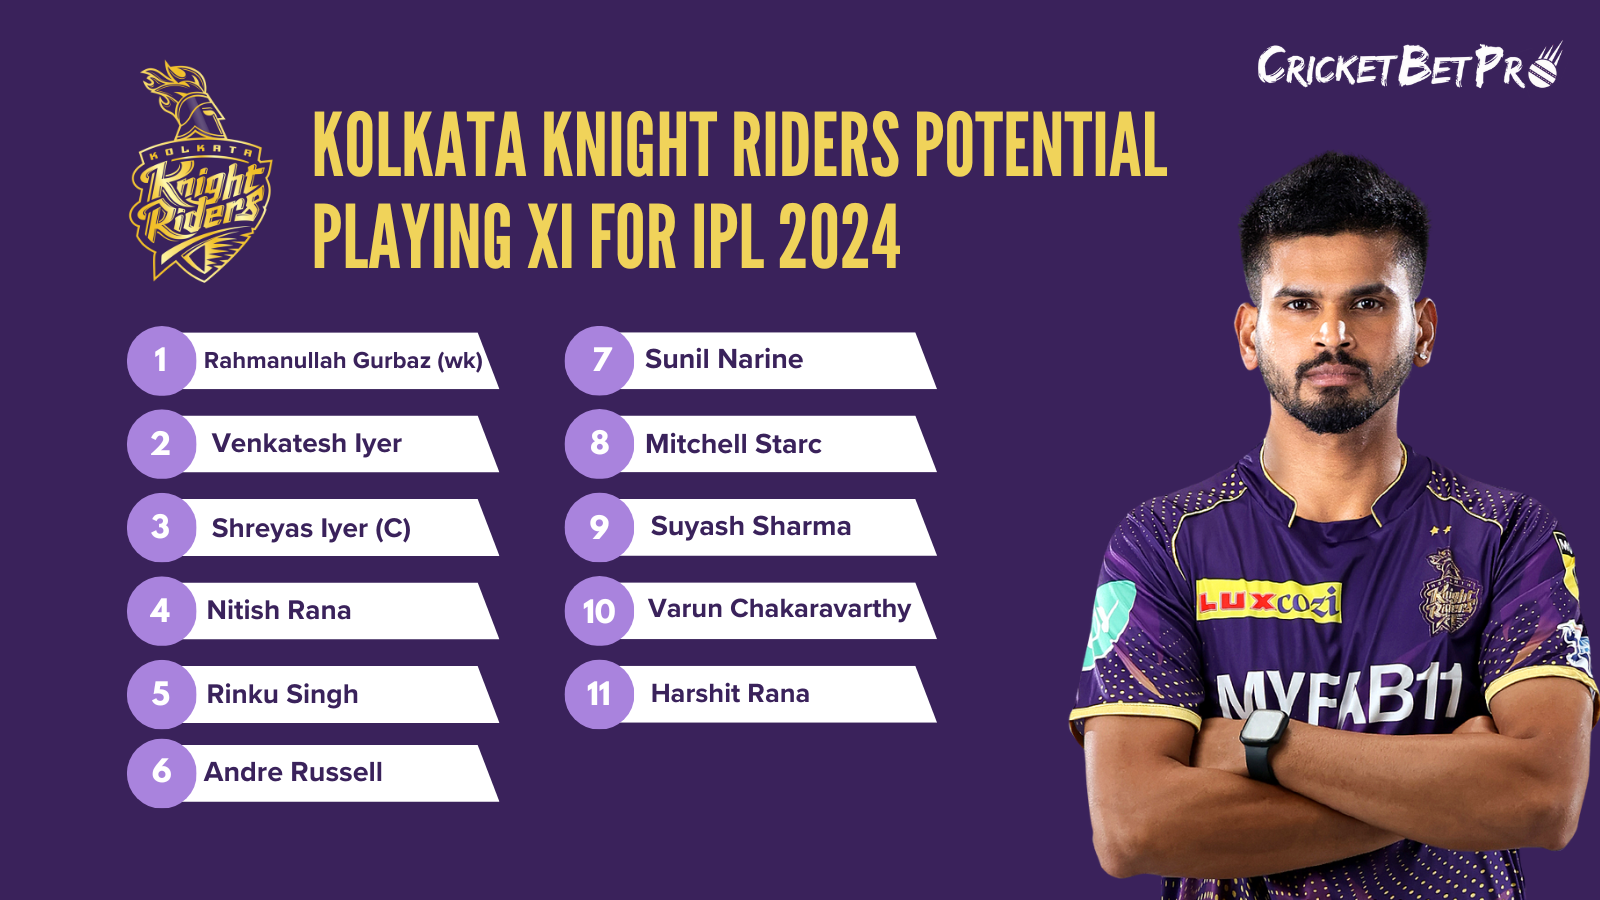 Kolkata Knight Riders Potential Playing XI for IPL 2024